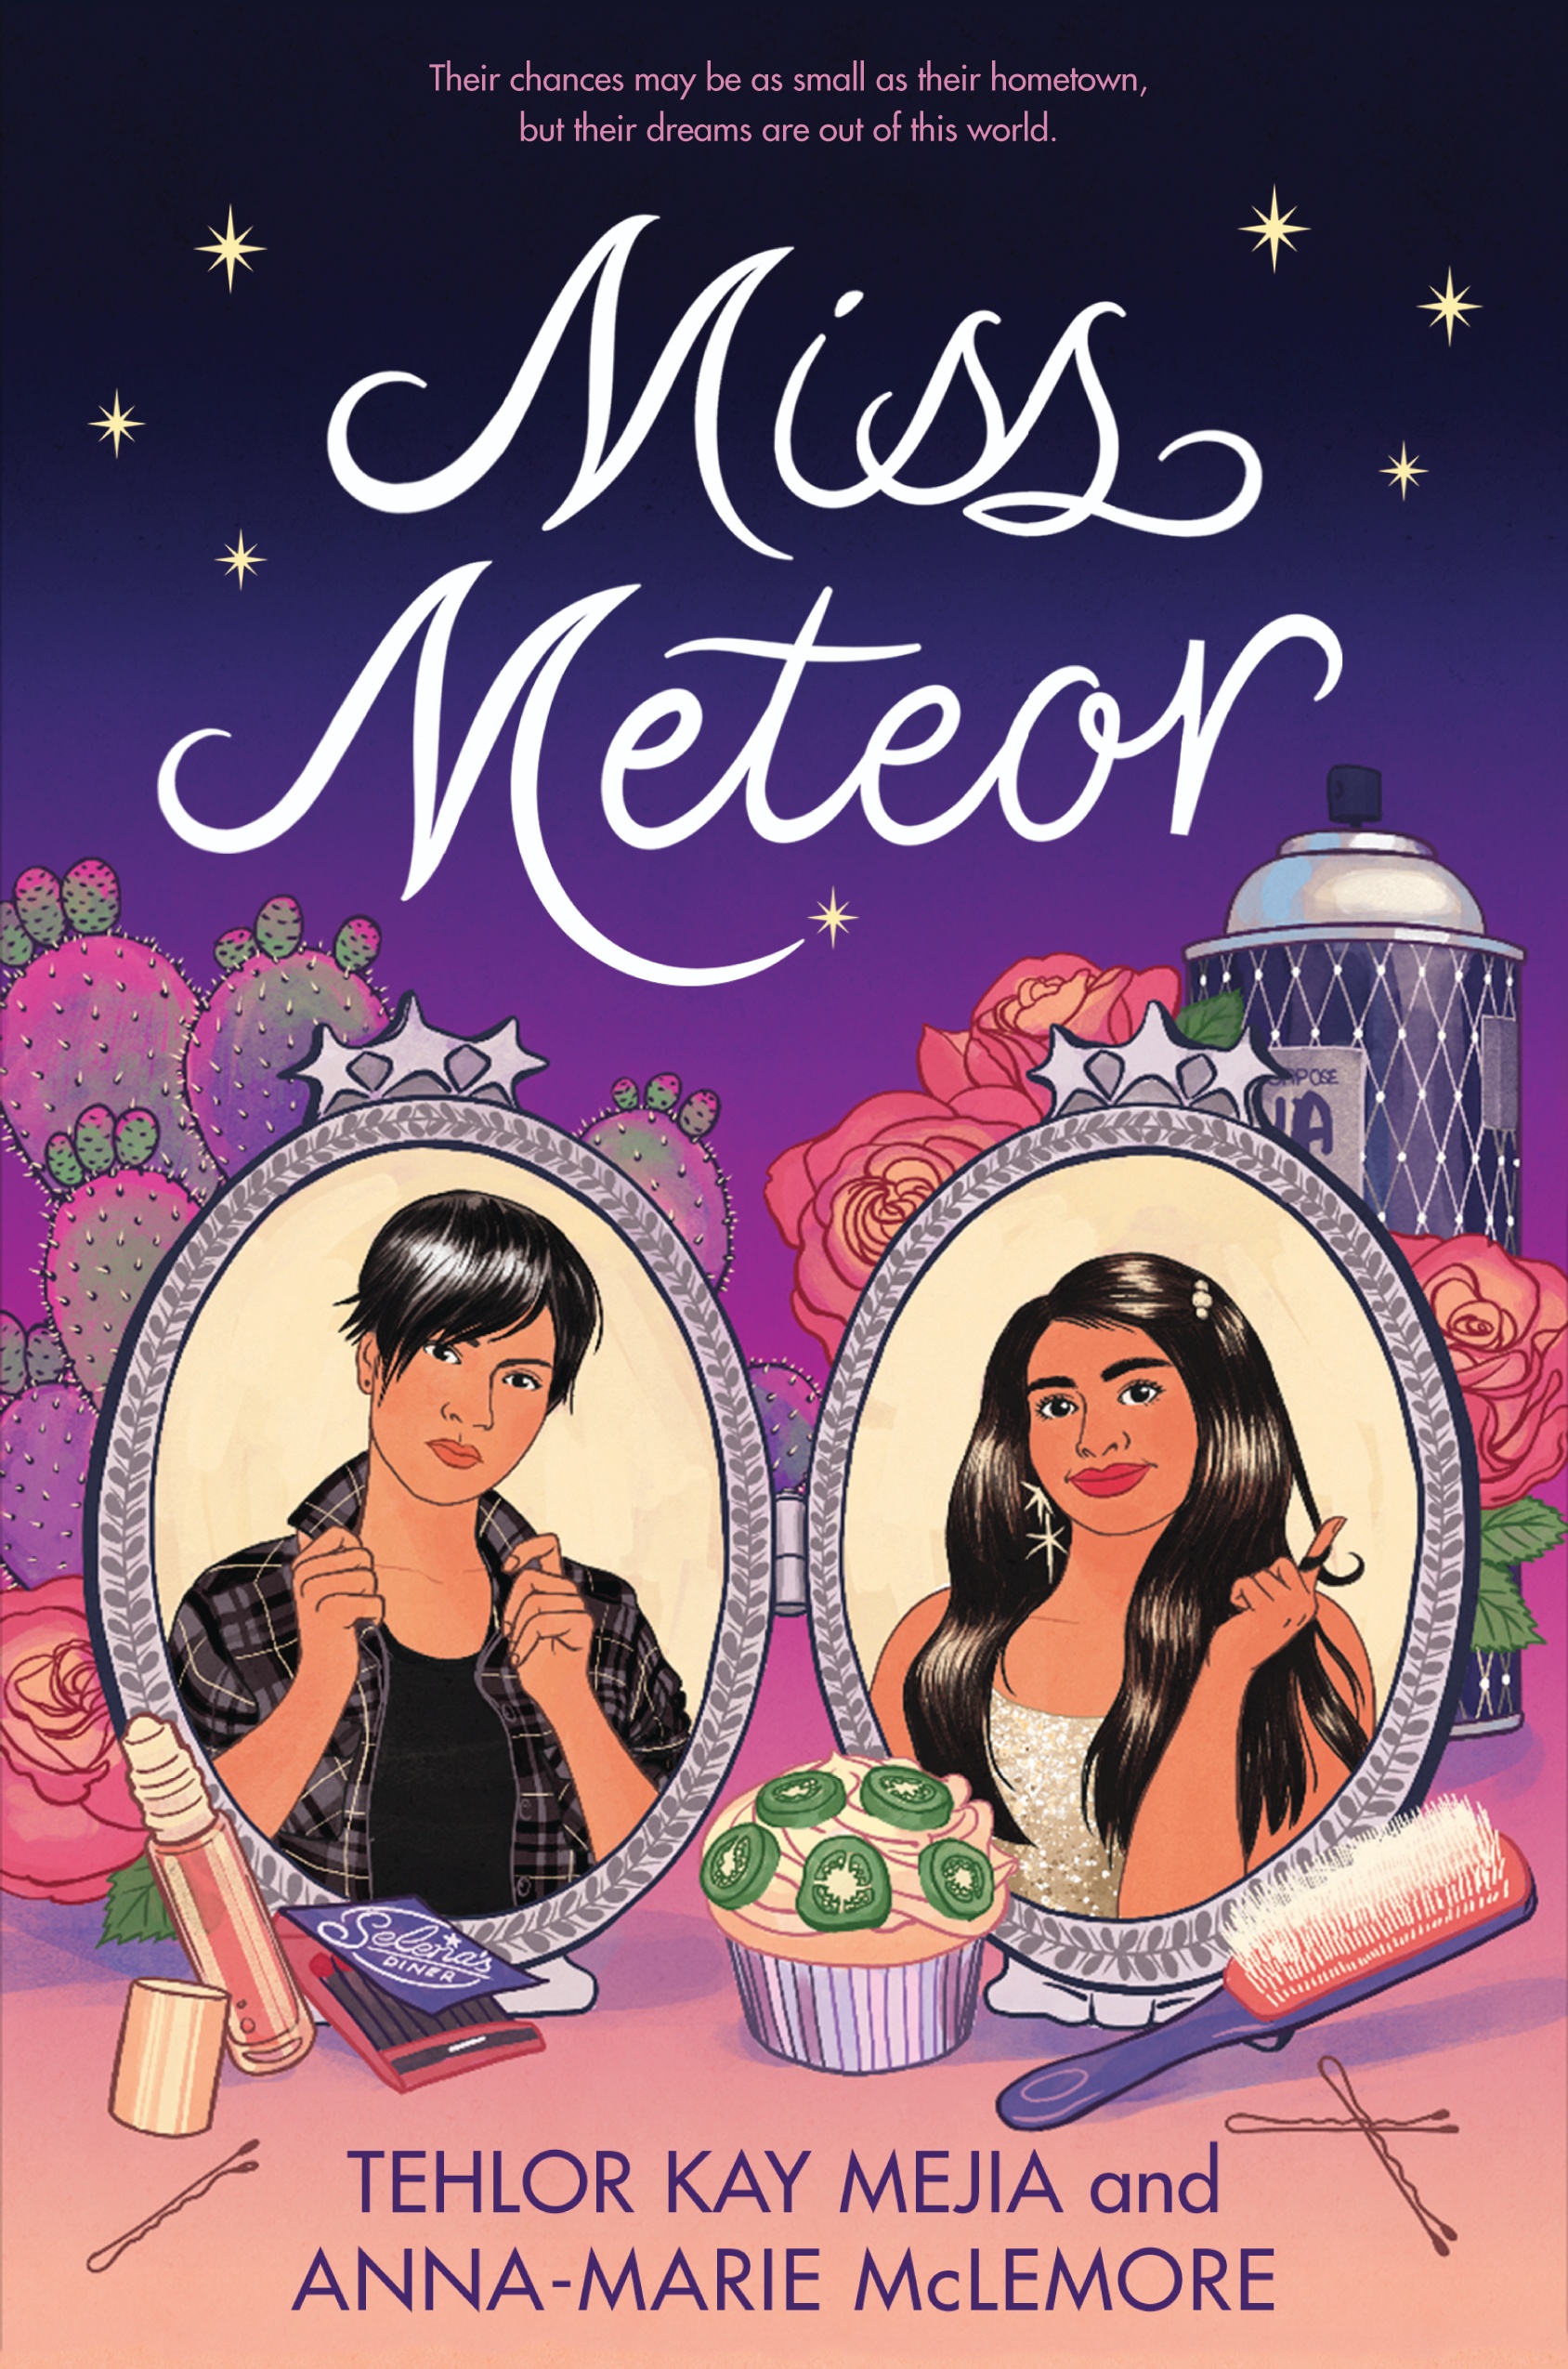 Image of "Miss Meteor"